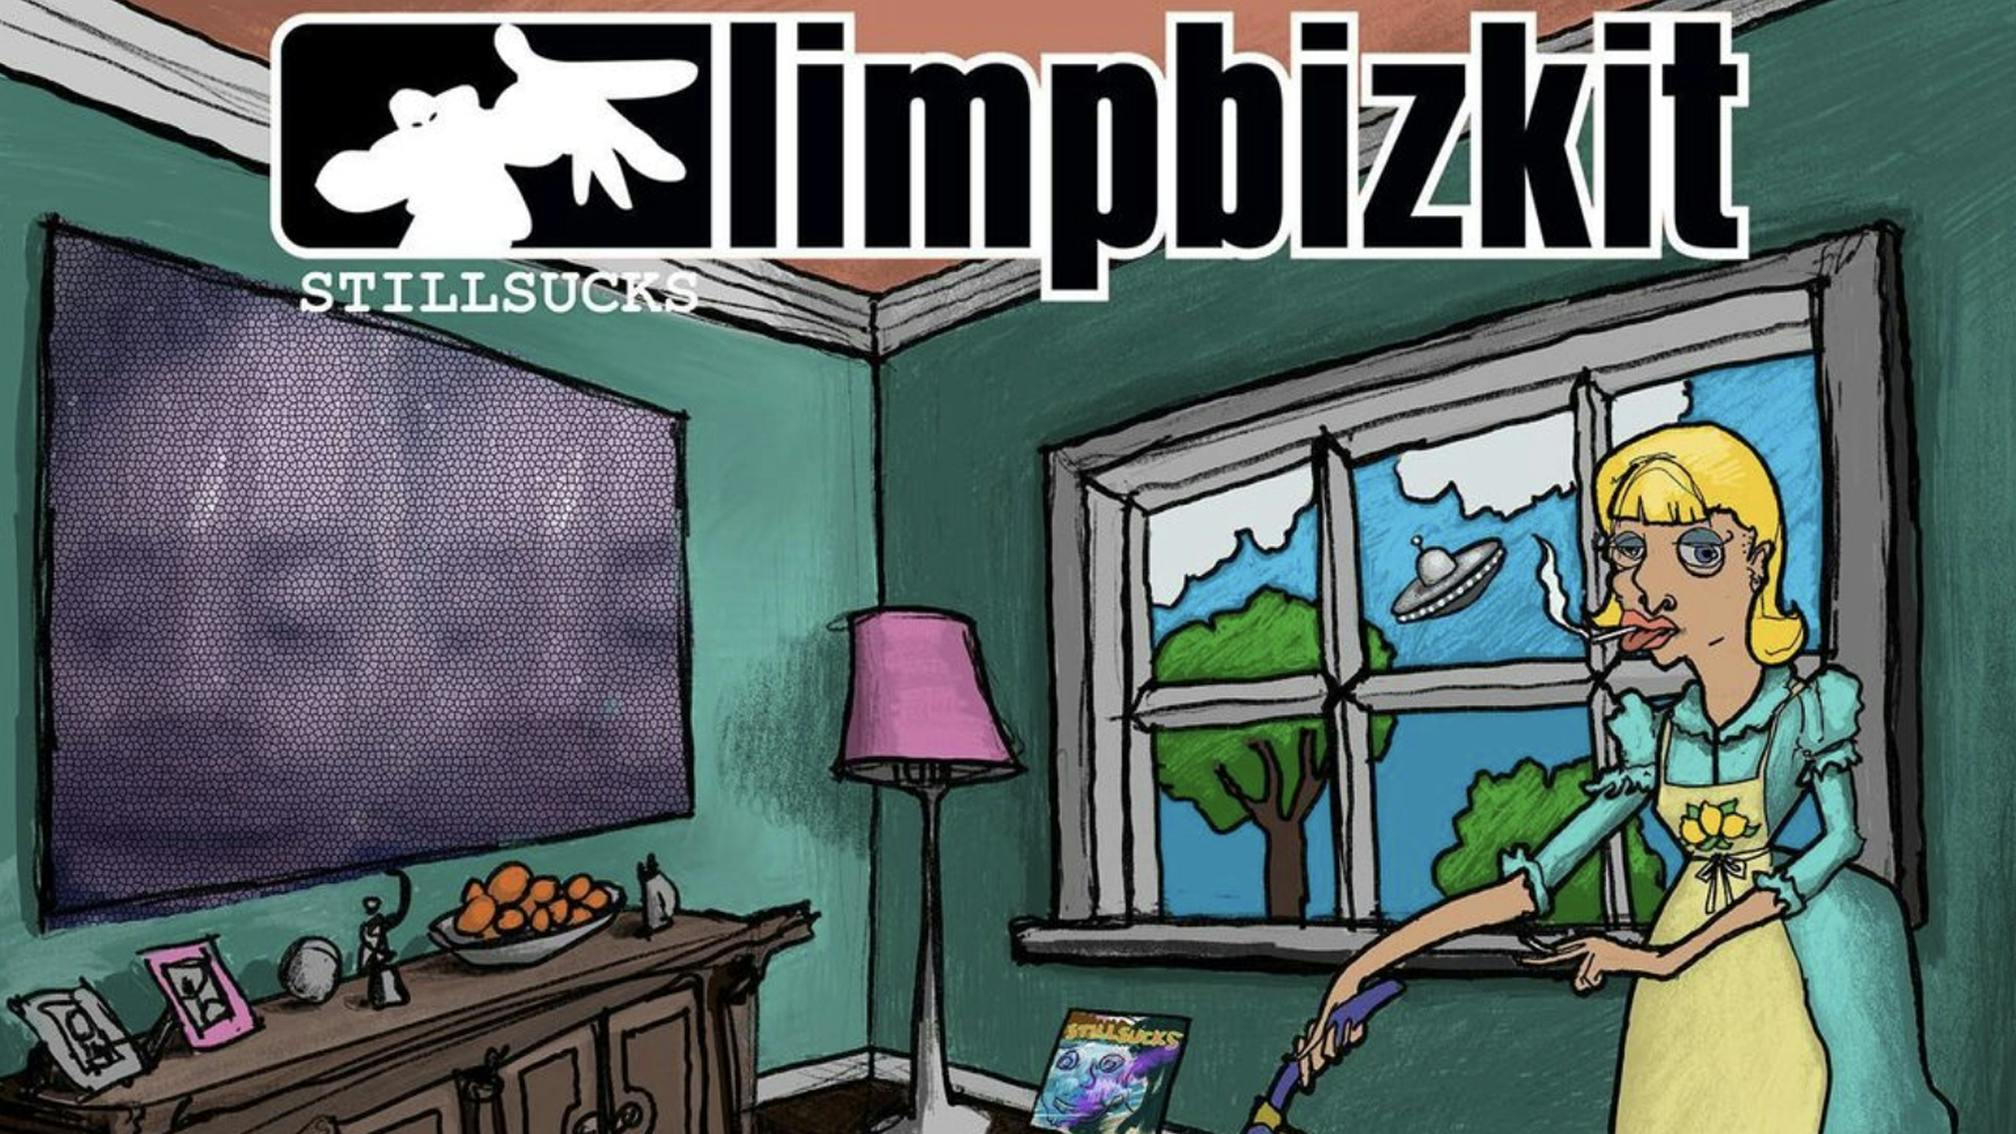 Limp Bizkit confirm long-awaited new album, Still Sucks